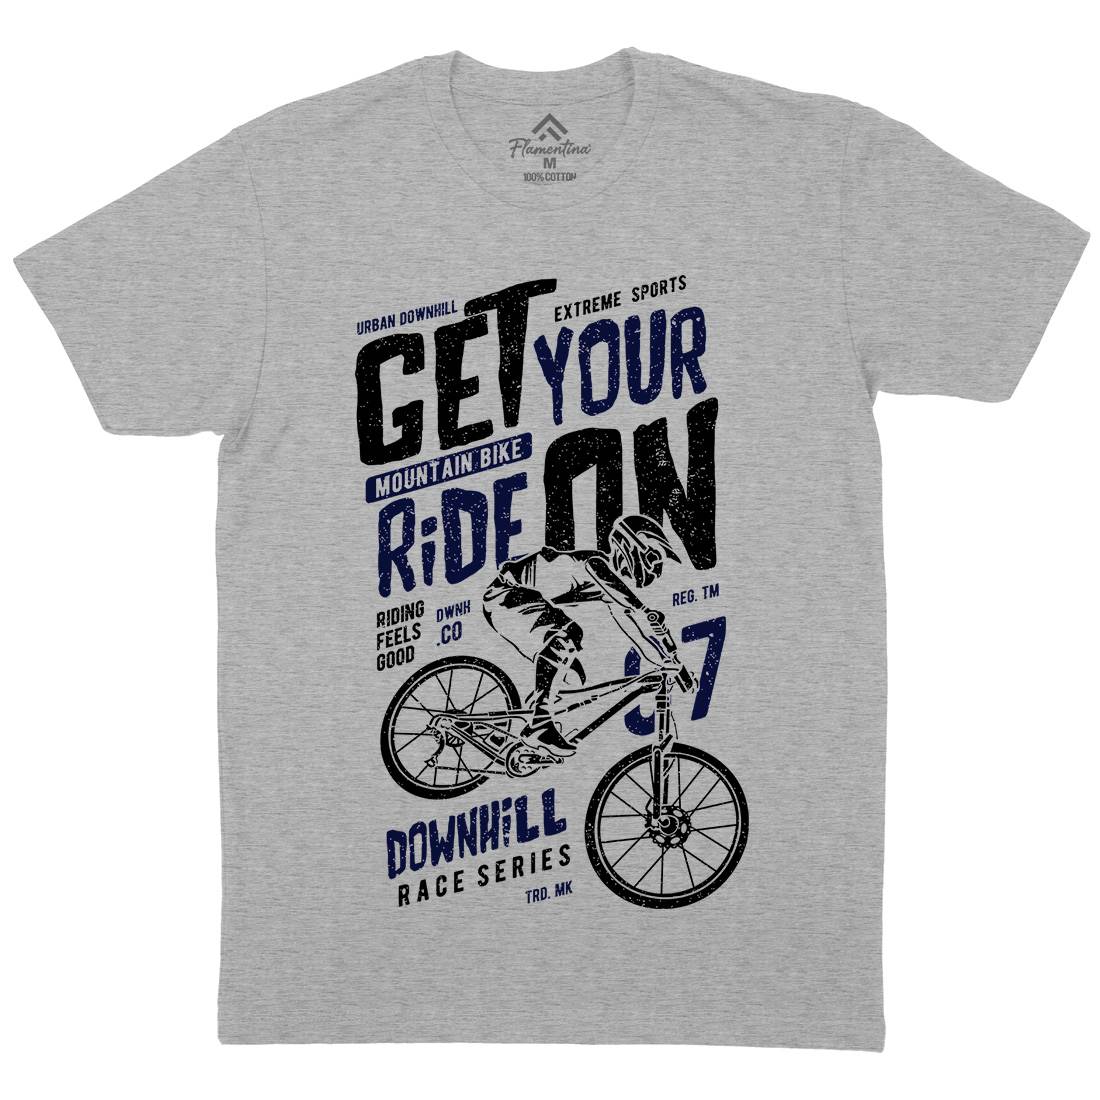 Get Your Ride Mens Organic Crew Neck T-Shirt Bikes A673